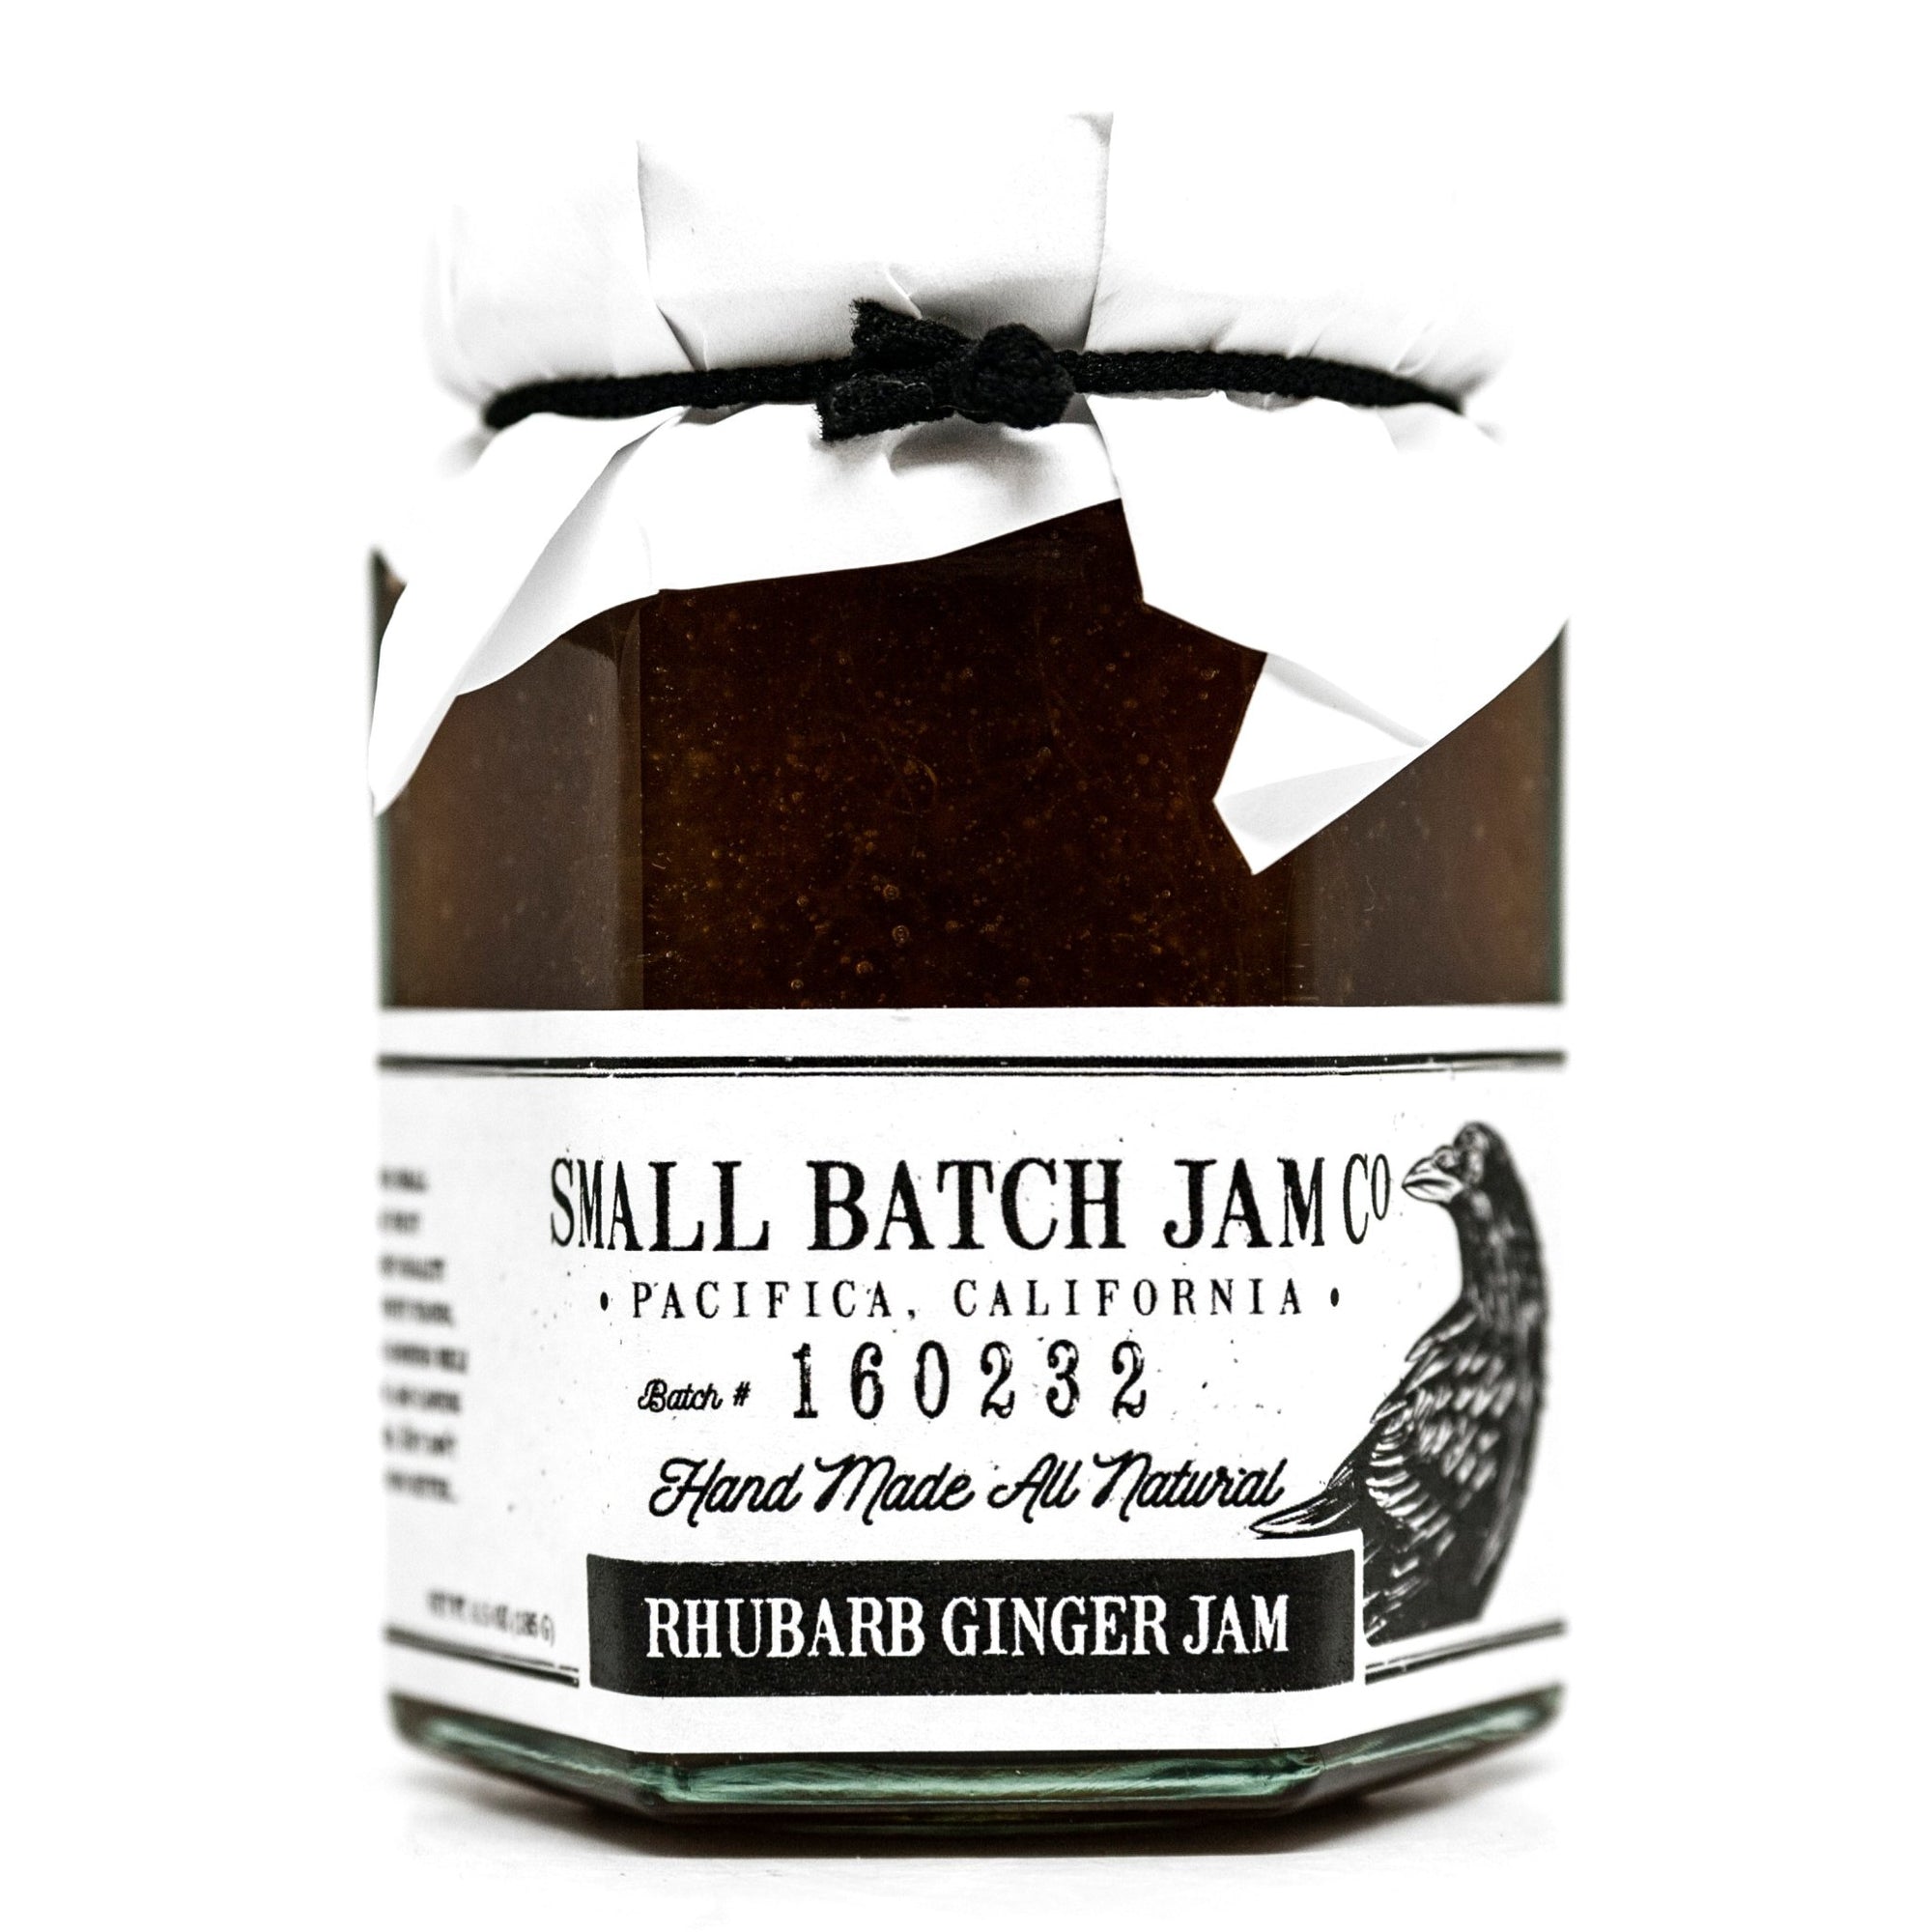 Rhubarb Ginger Jam - Small Batch Jam Co